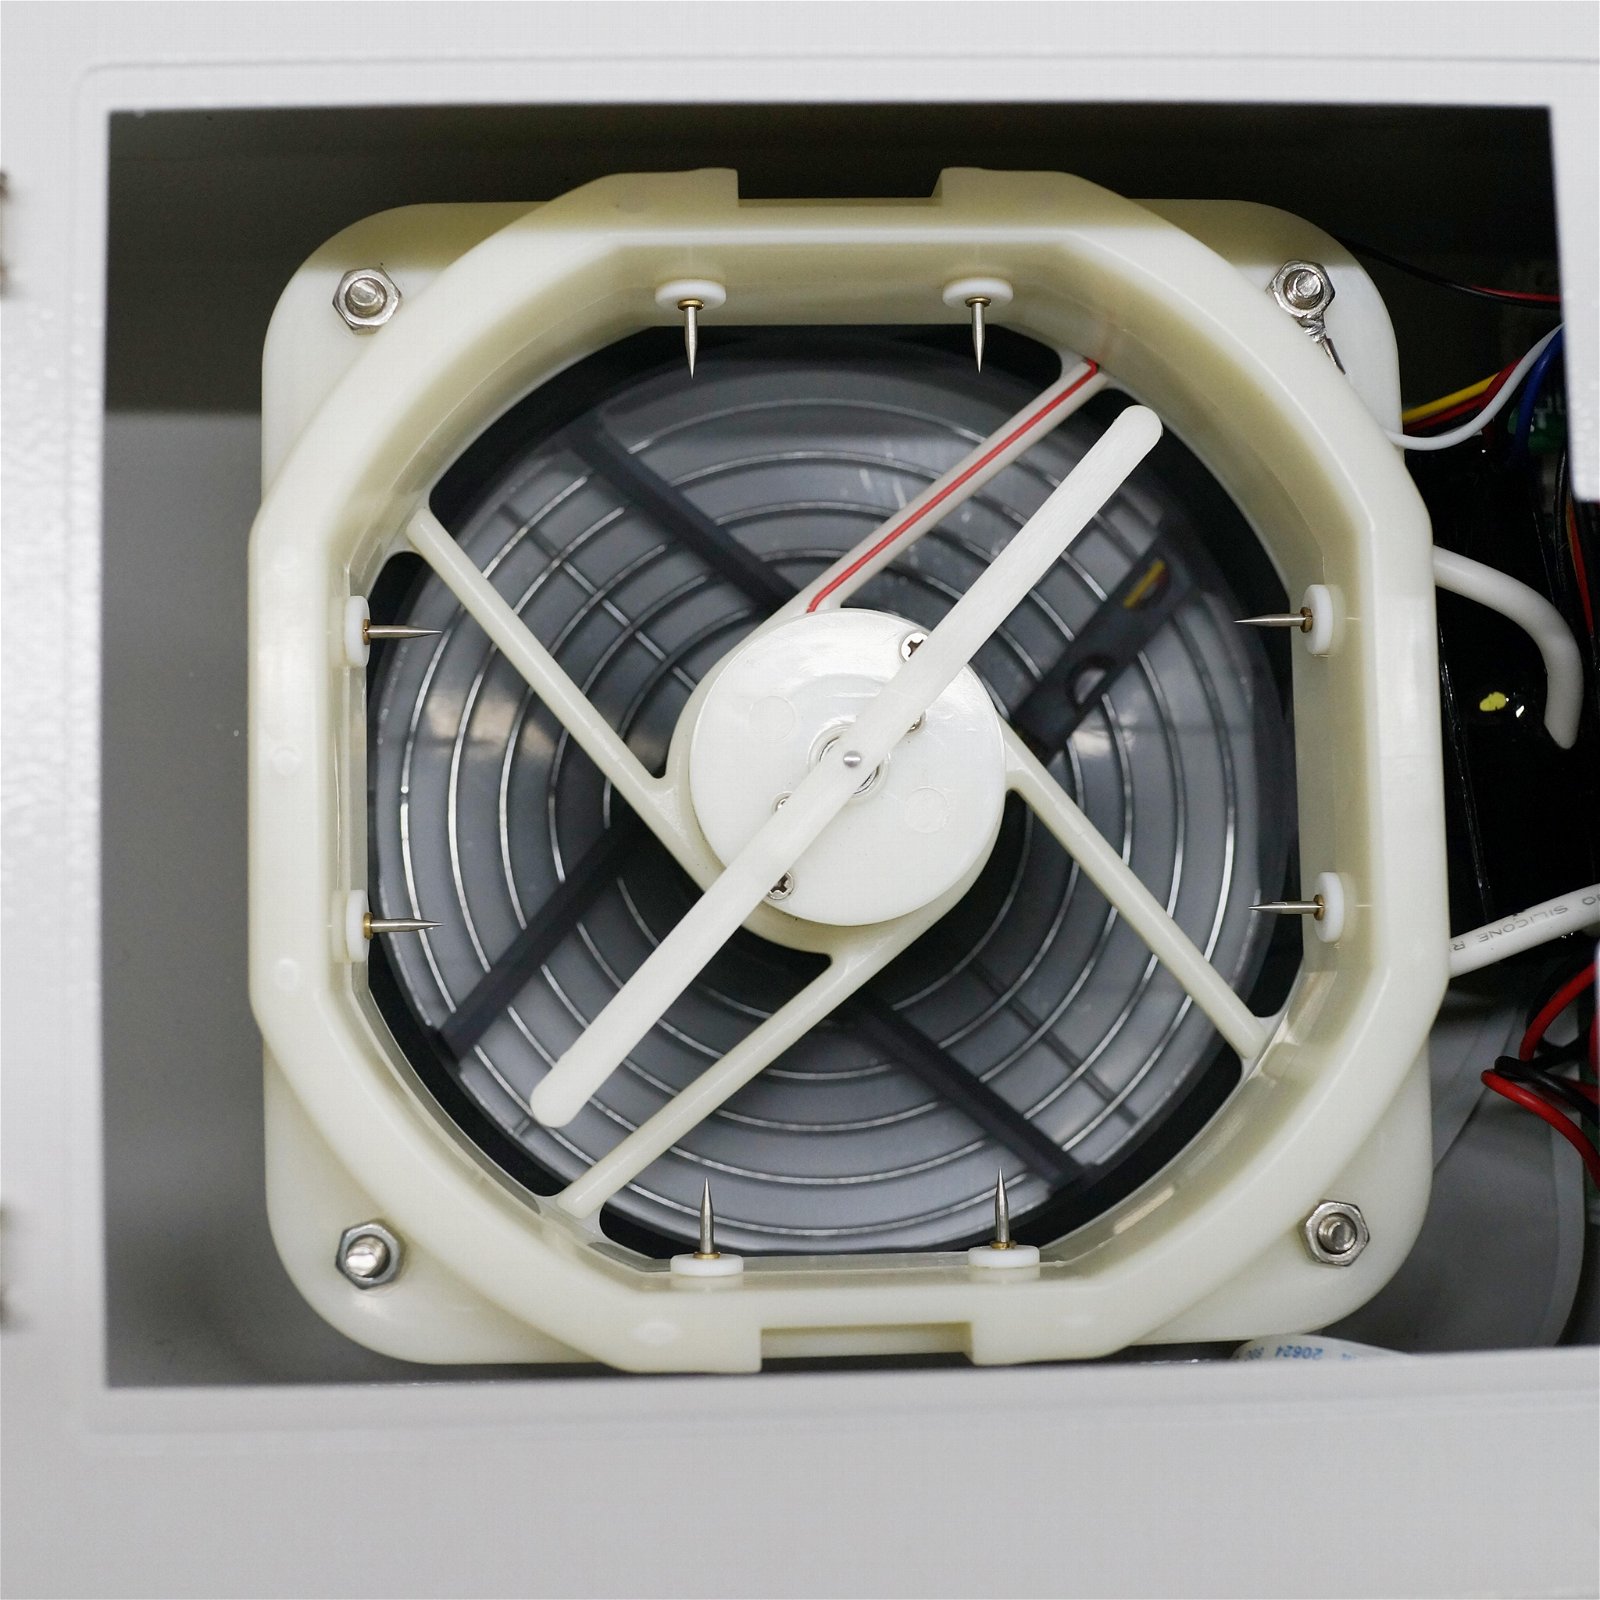 2 fans smart auto clean ion balance monitor ionizer blower 6